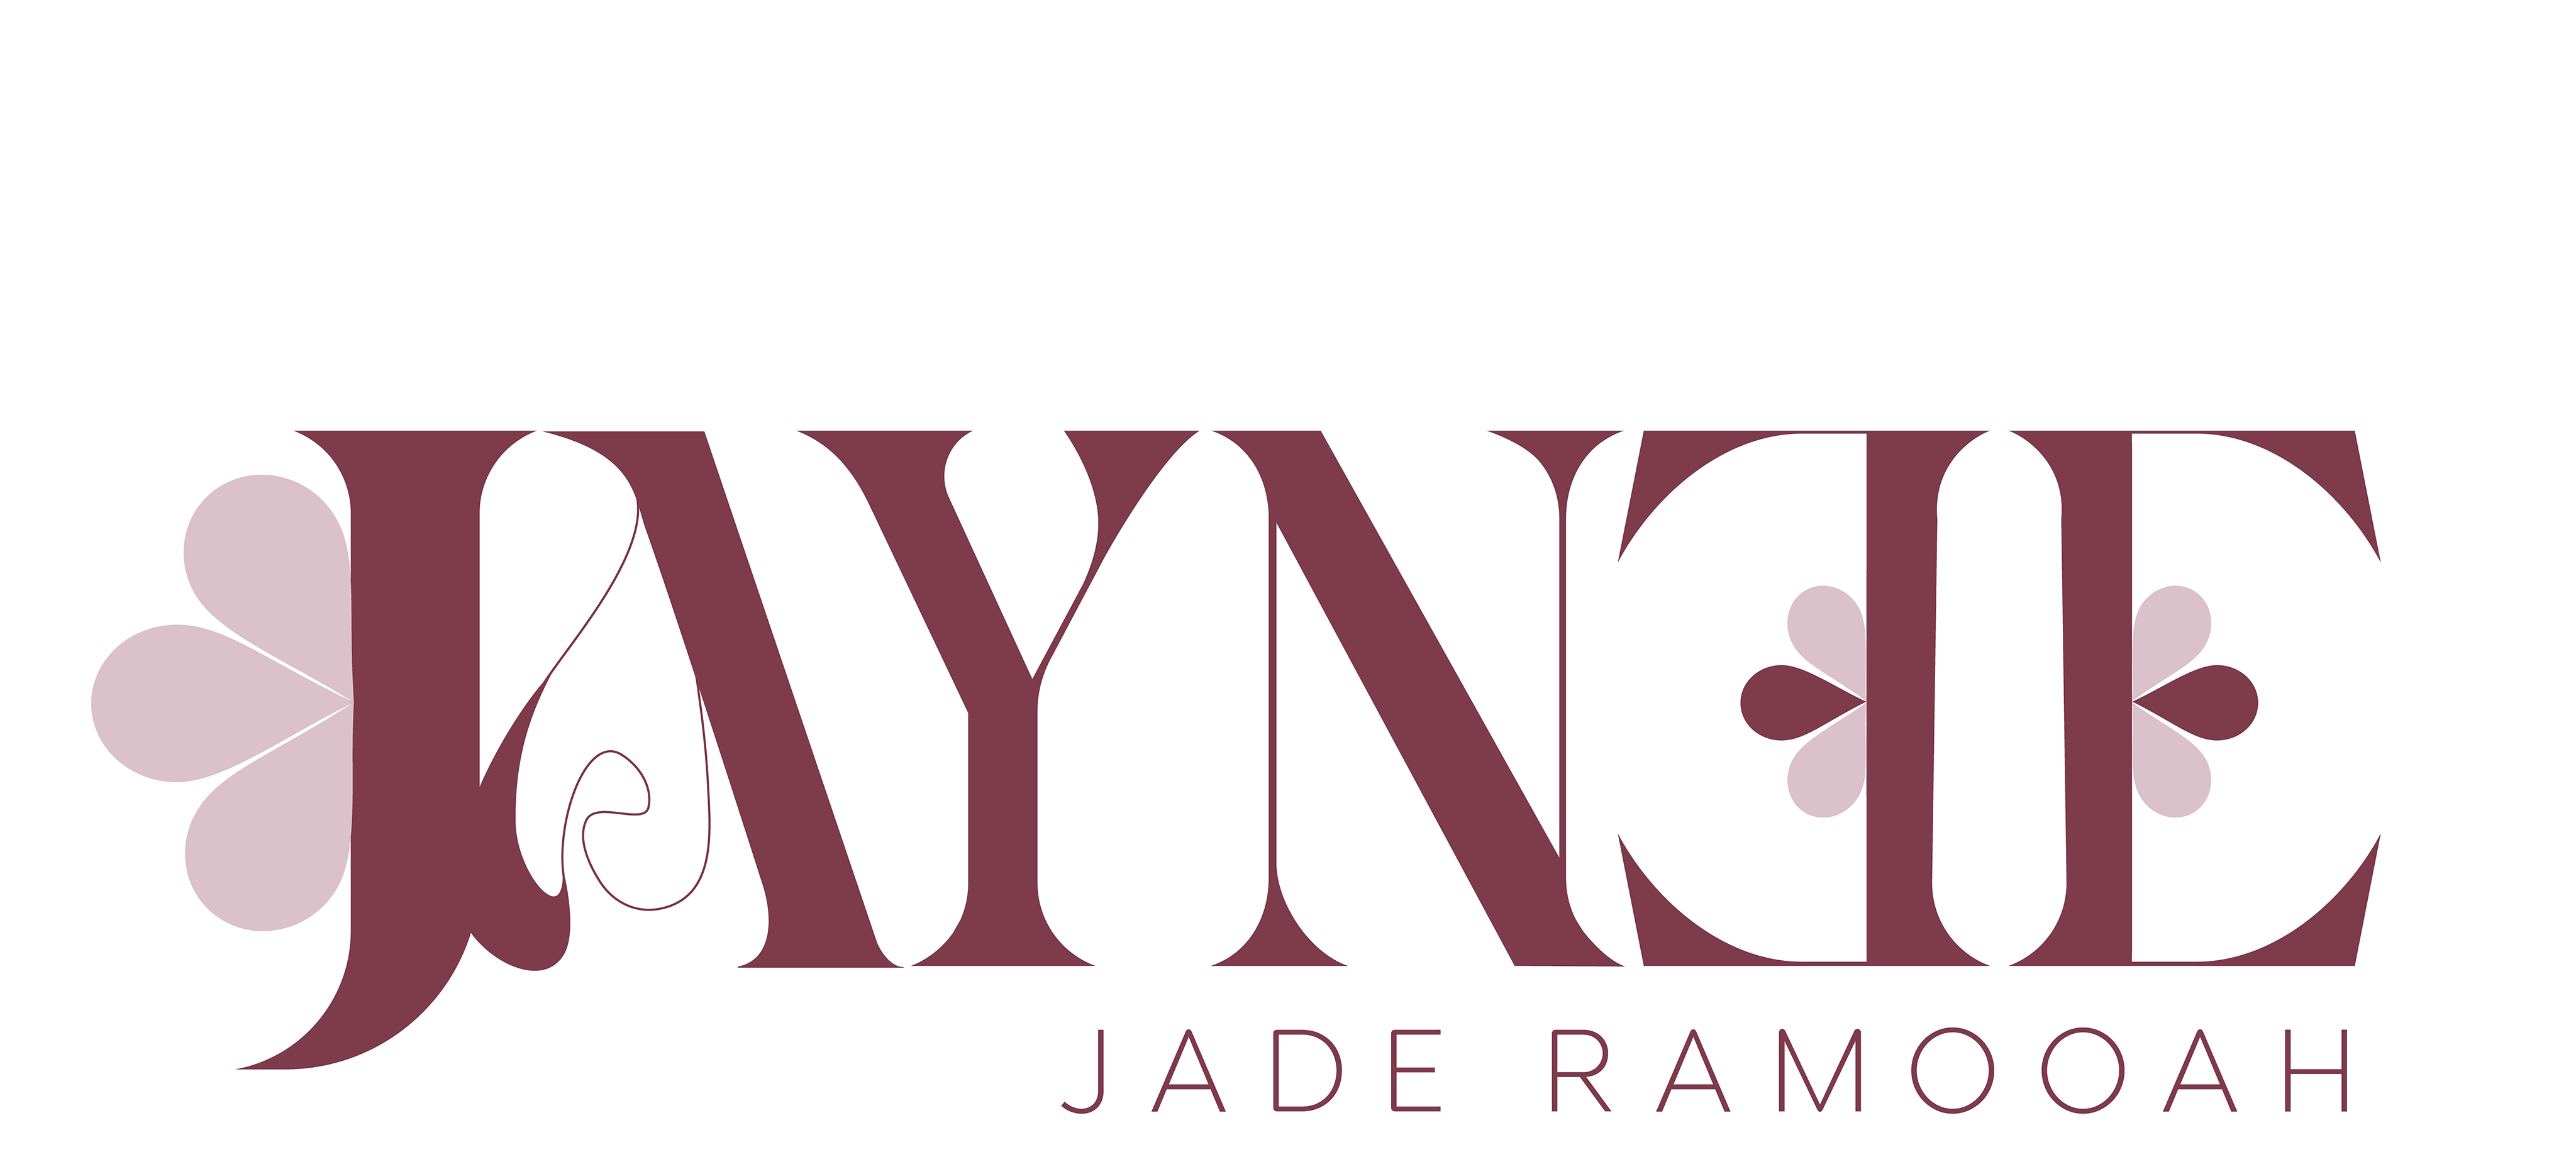 Jade Ramooah